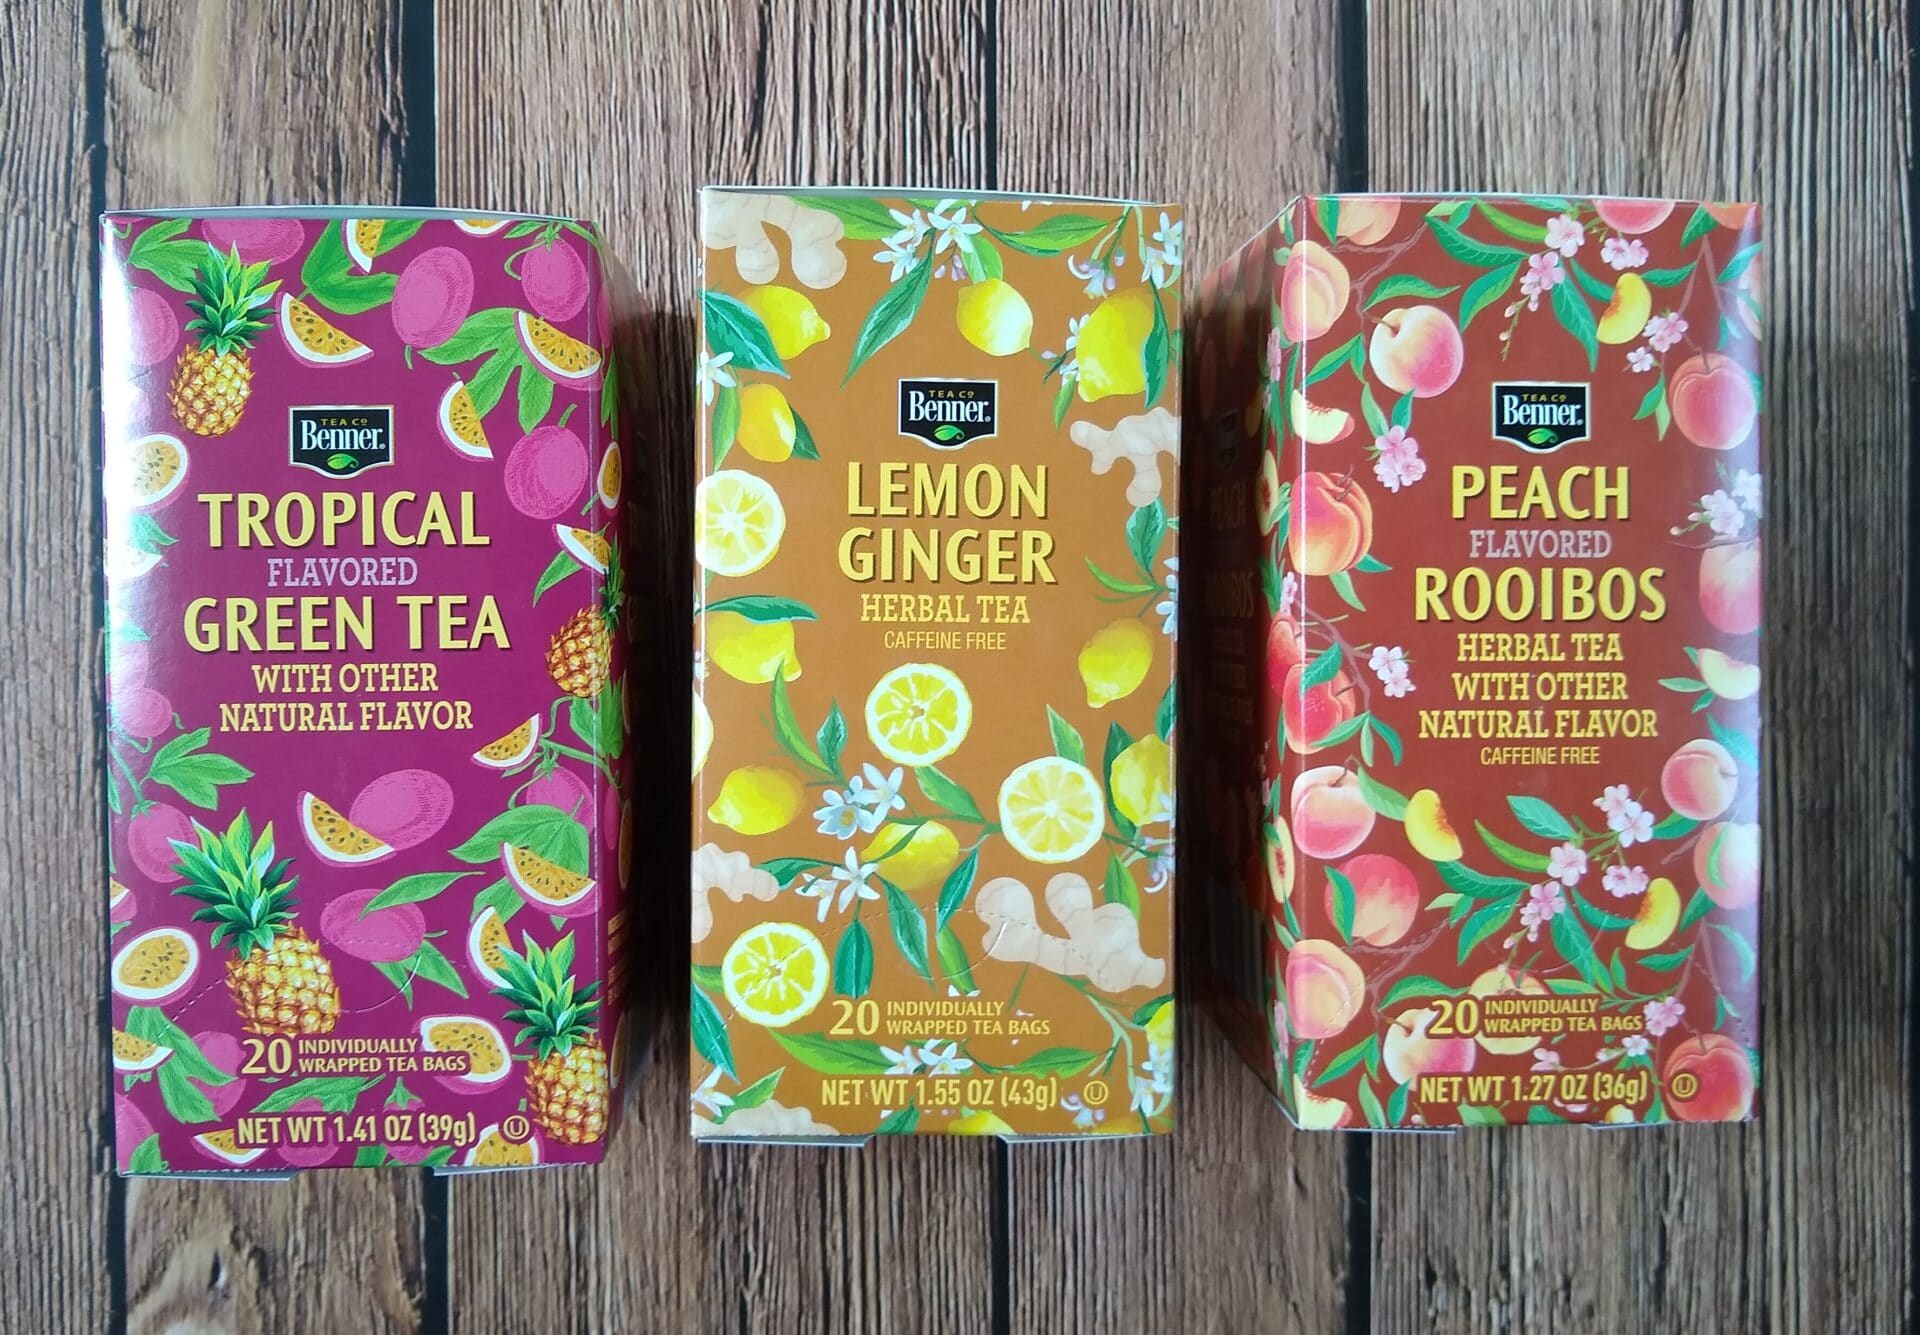 Benner Tropical Flavored Green Tea + Lemon Ginger Herbal Tea +